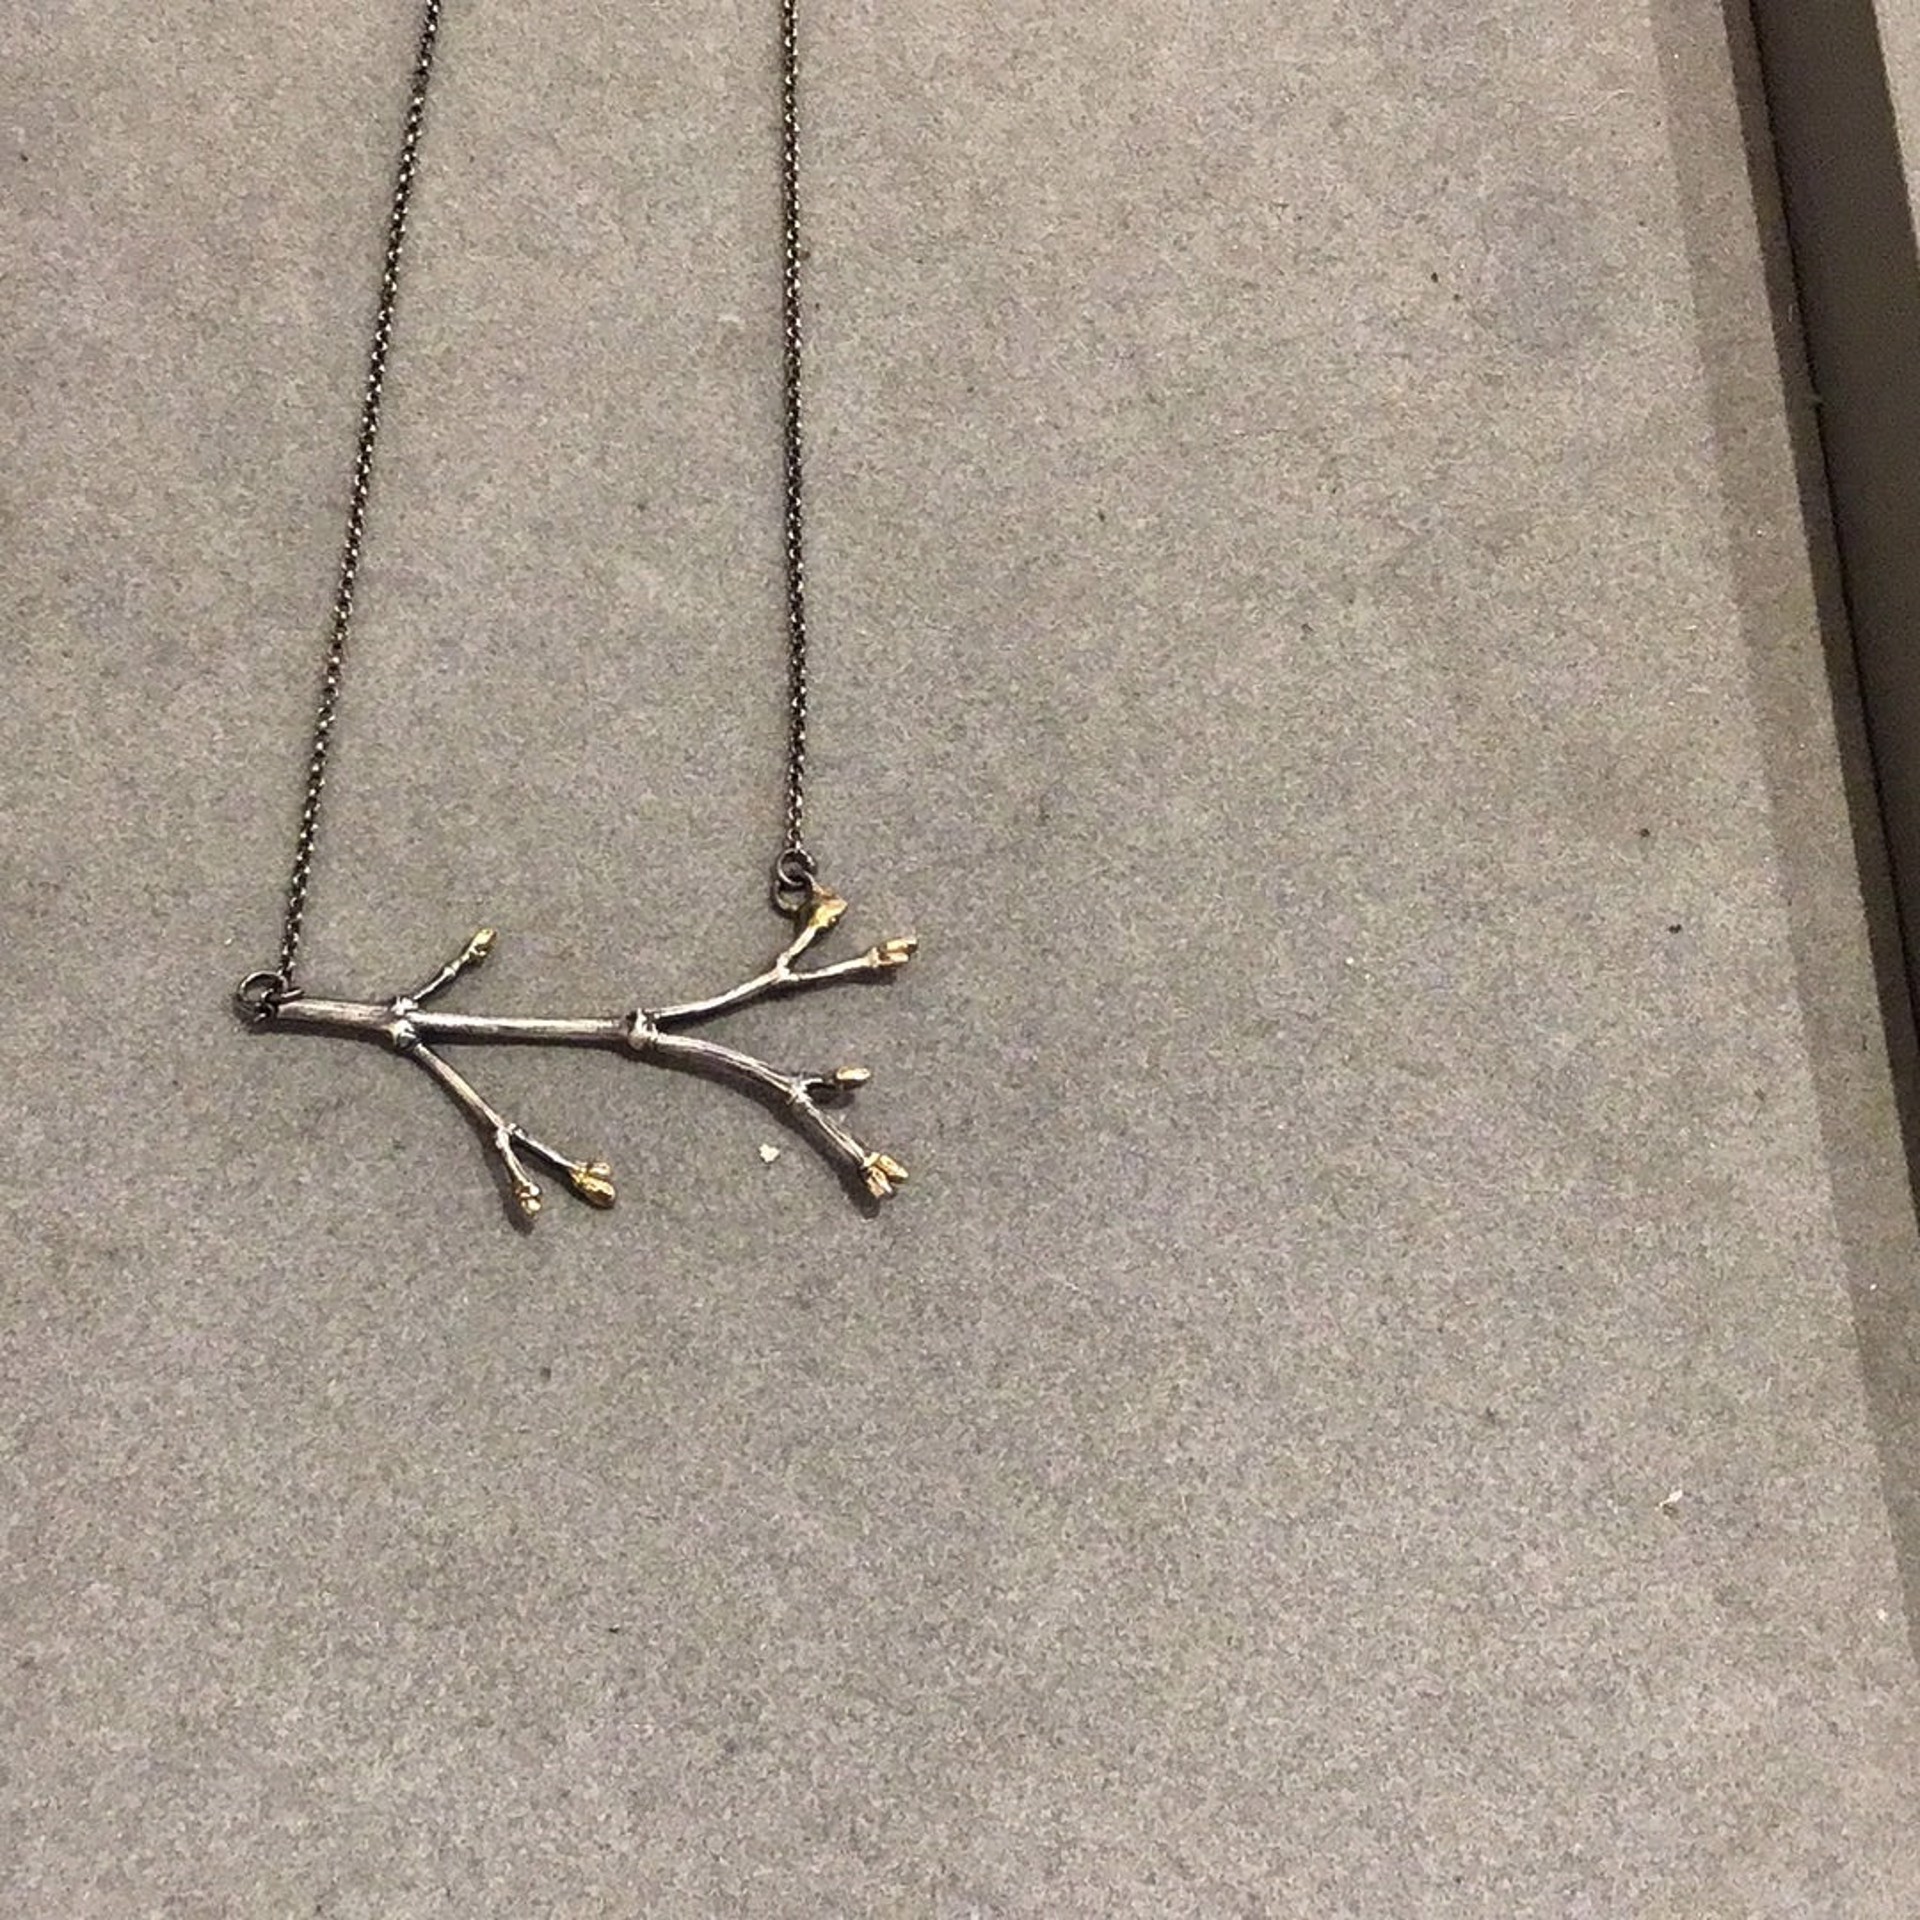 Maple necklace w/ 24 k by Sara Thompson